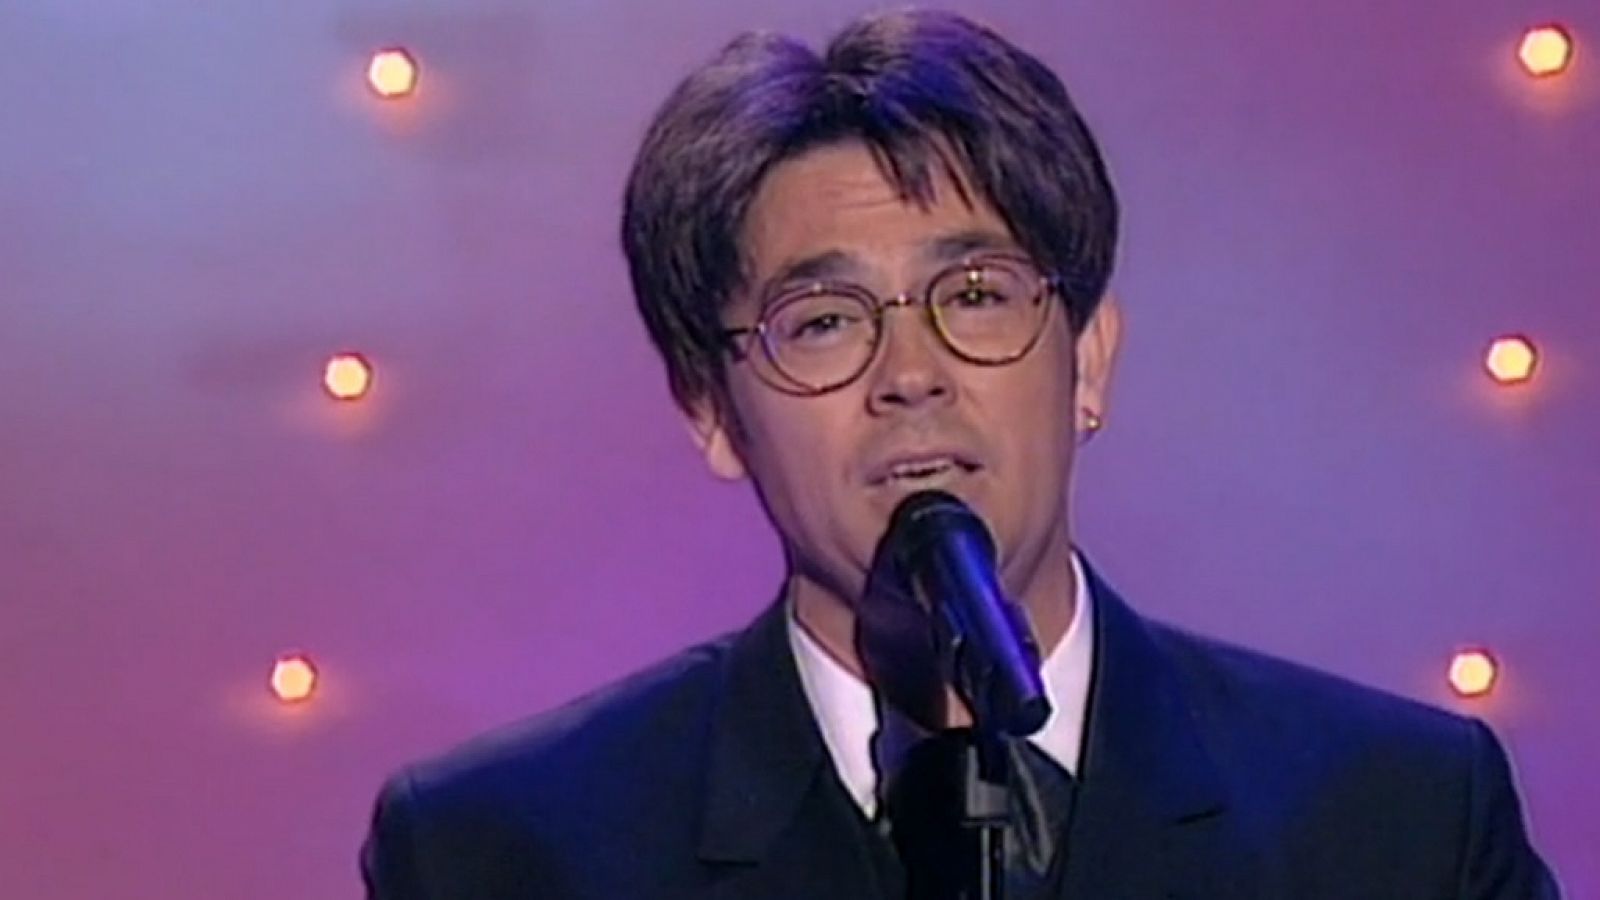 Festival de Eurovisión 1998 - Mikel Herzog cantó "¿Qué voy a hacer sin ti?"